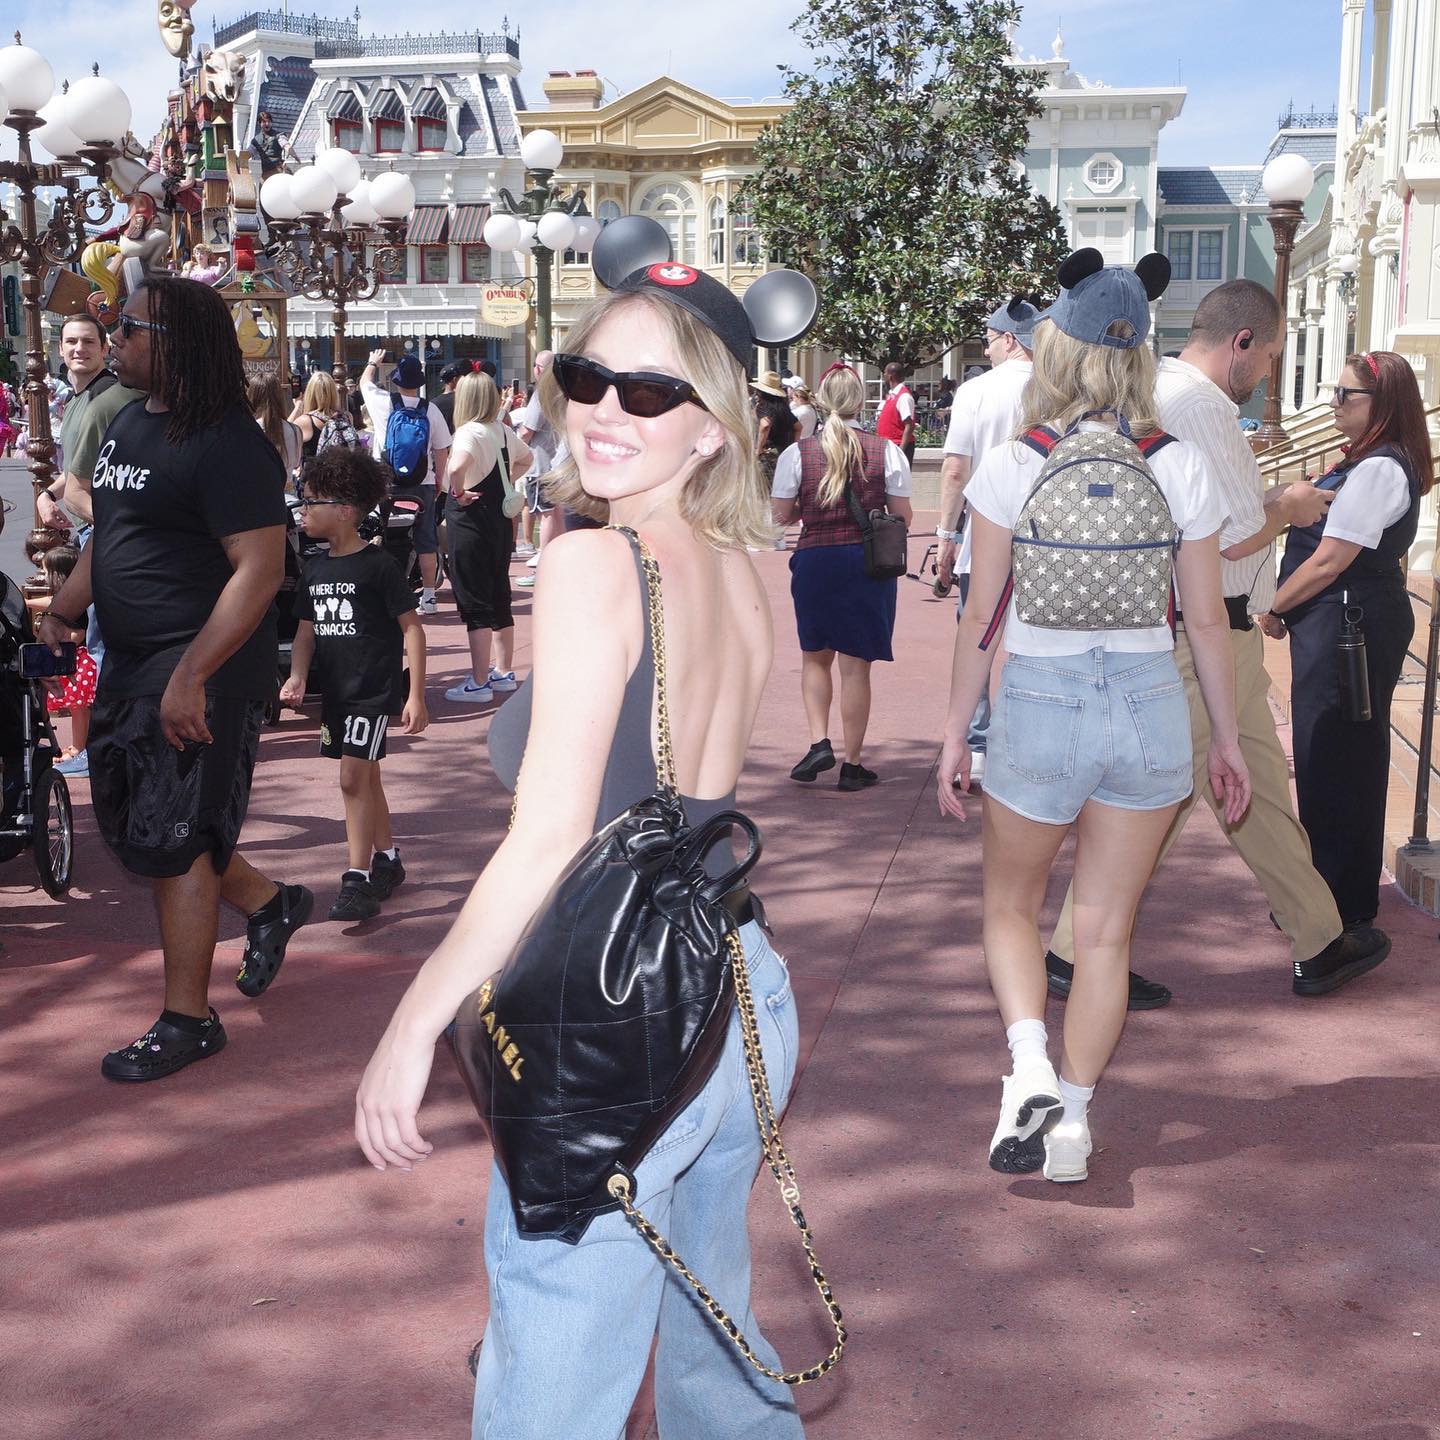 Sydney Sweeney’s Day at Disney! - Photo 9